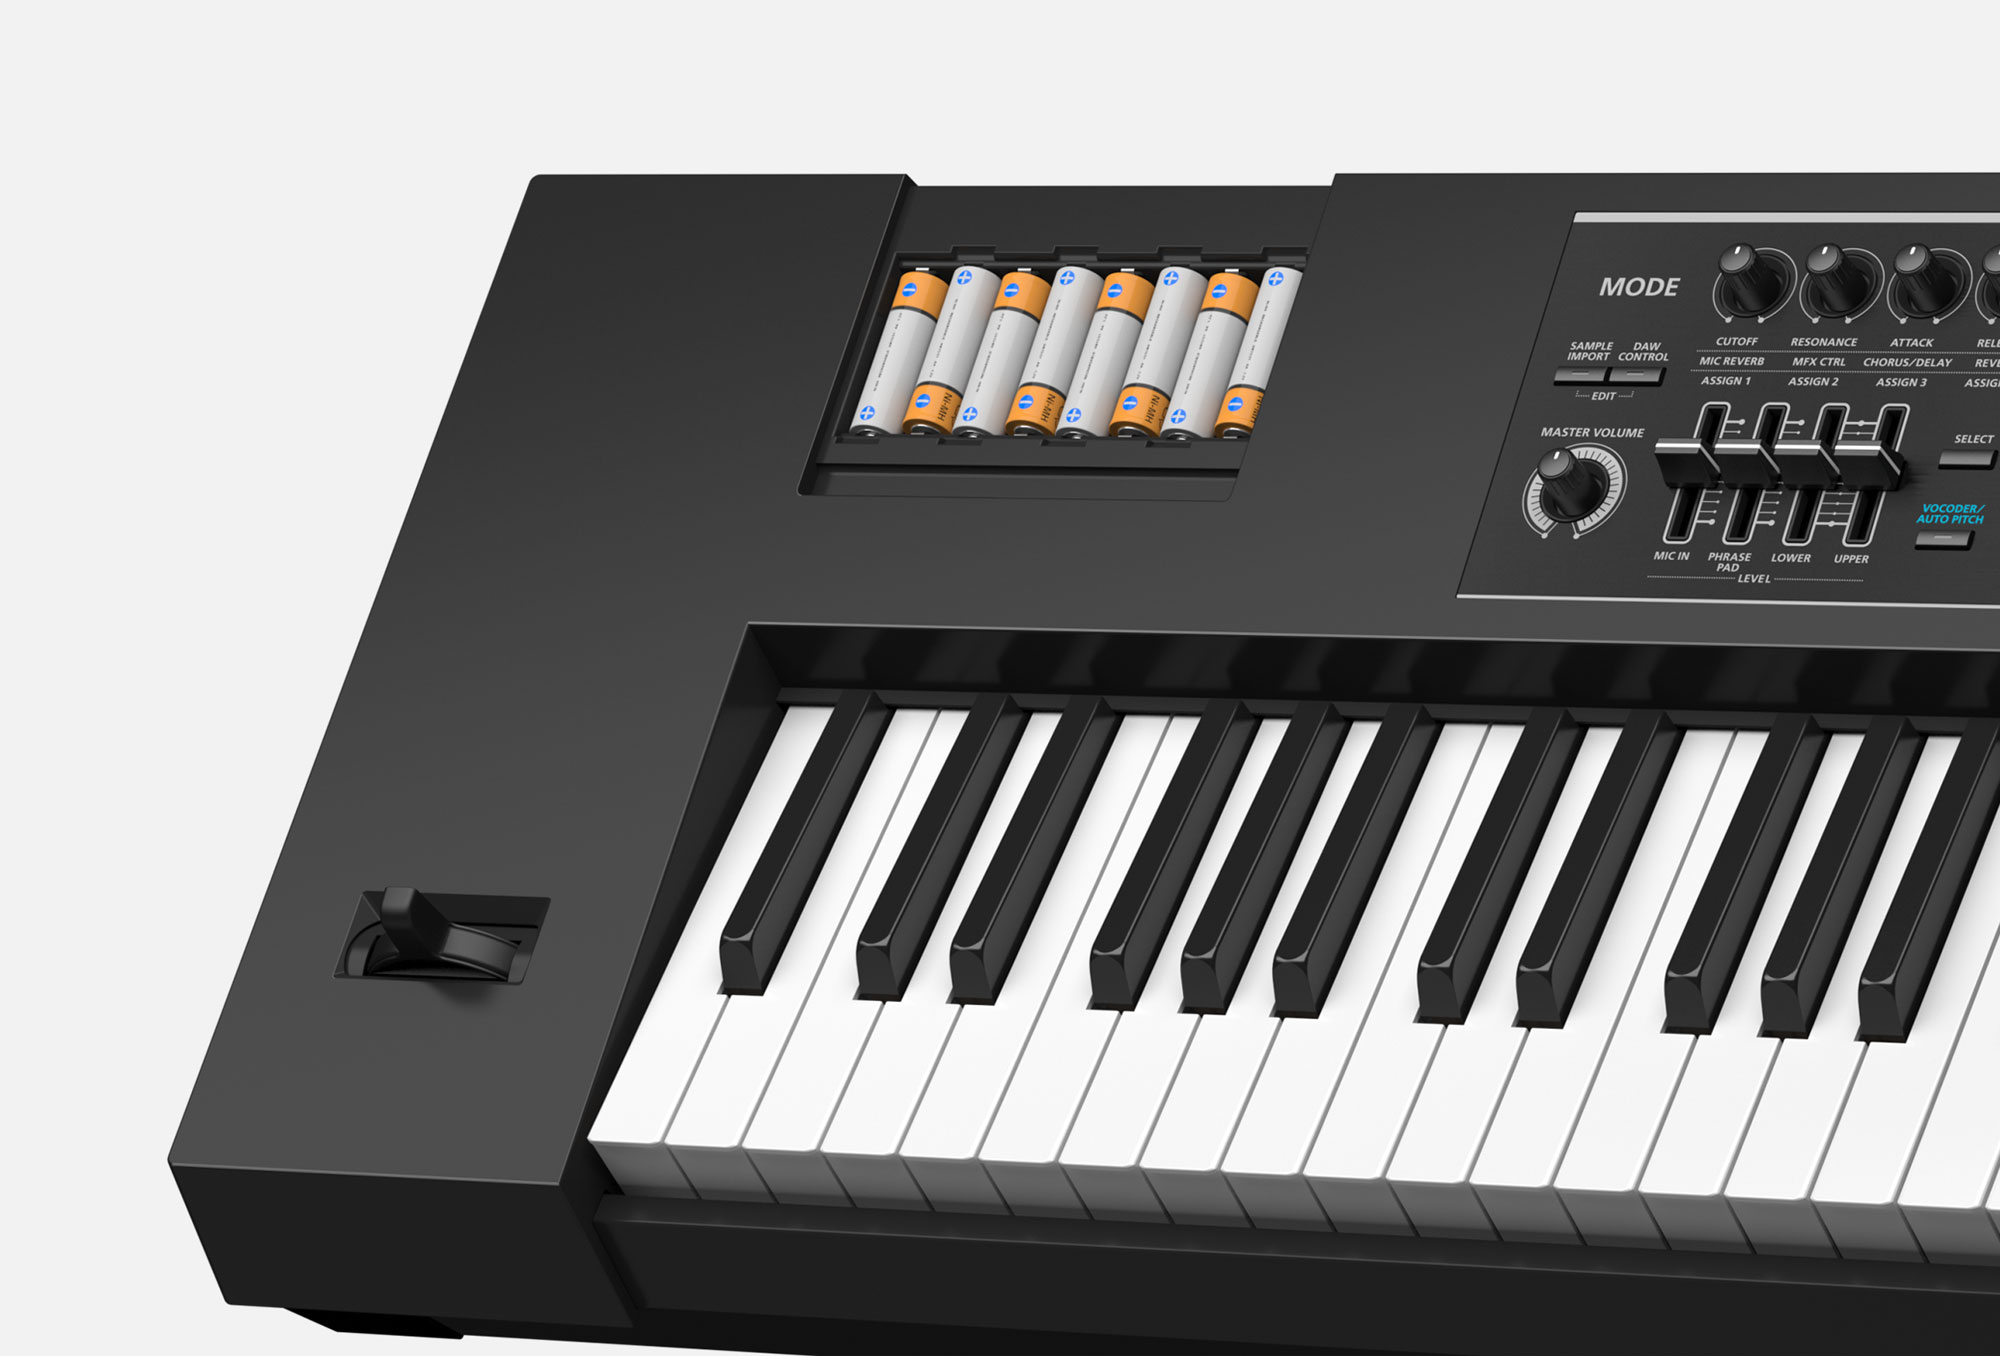 Roland Juno-DS88 88-key Iconic Performance Synthesizer